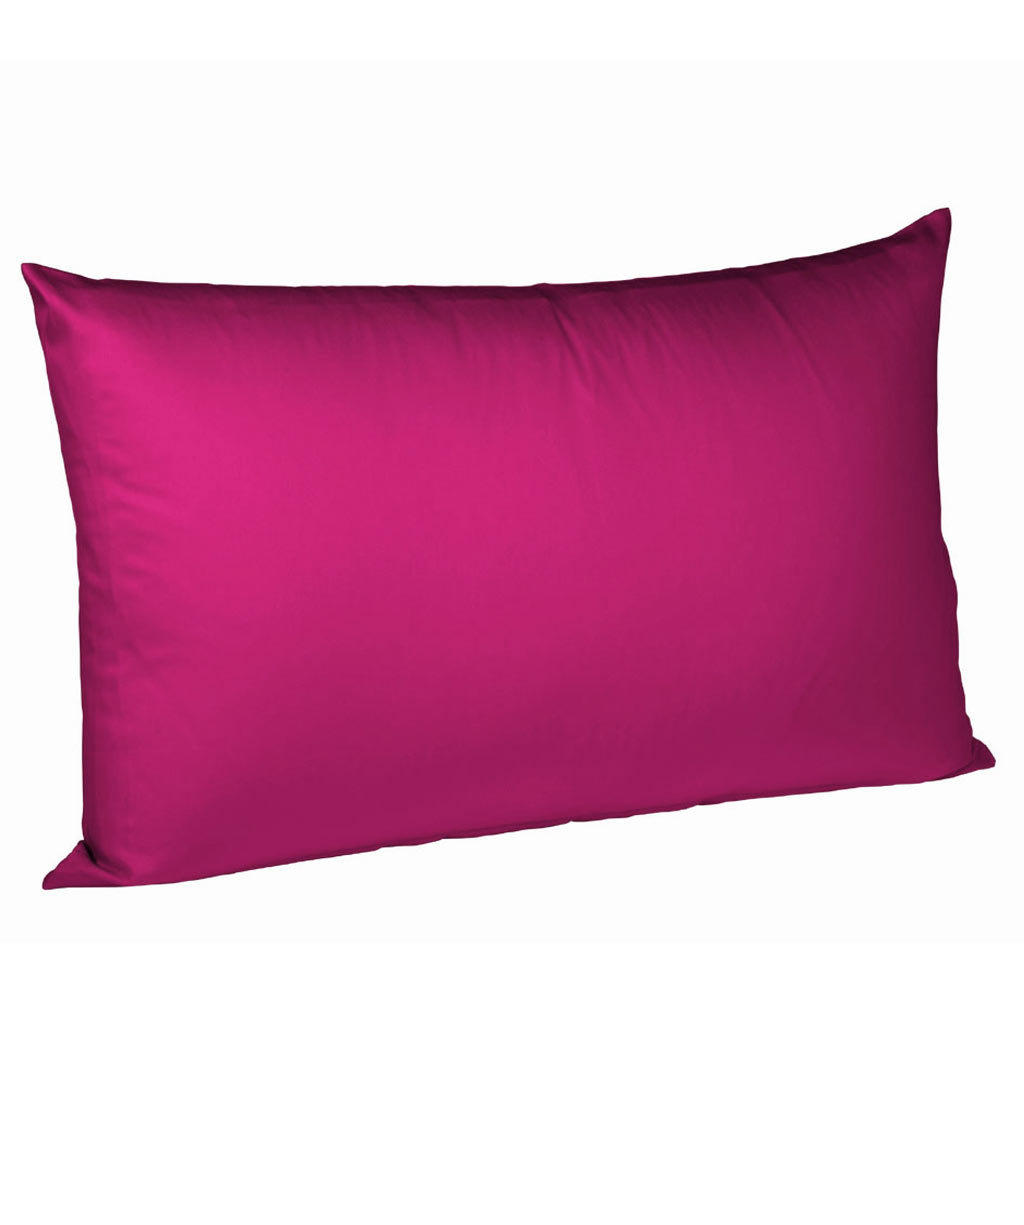 ČALÚNENÝ POŤAH, 50/70 cm, bavlna - pink, Basics, textil (50/70cm) - Fleuresse